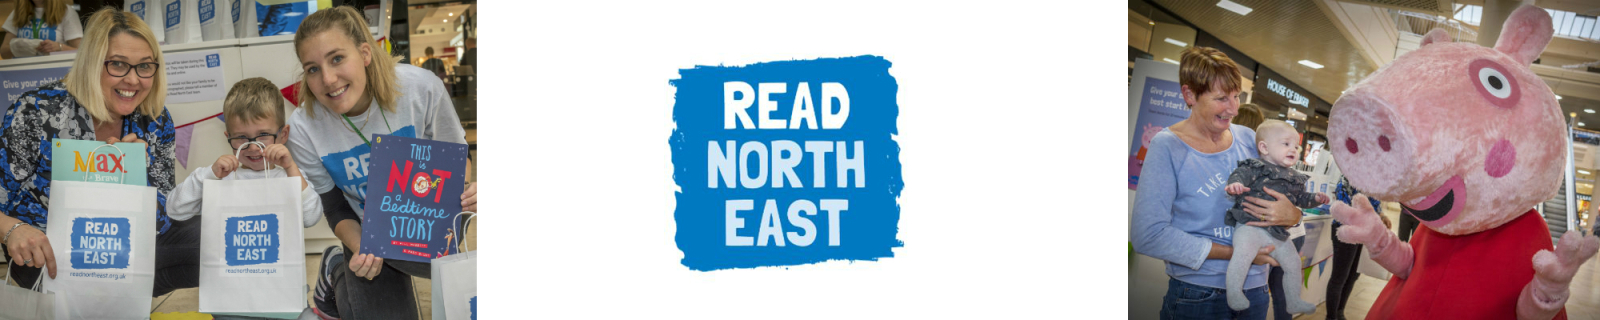 read-north